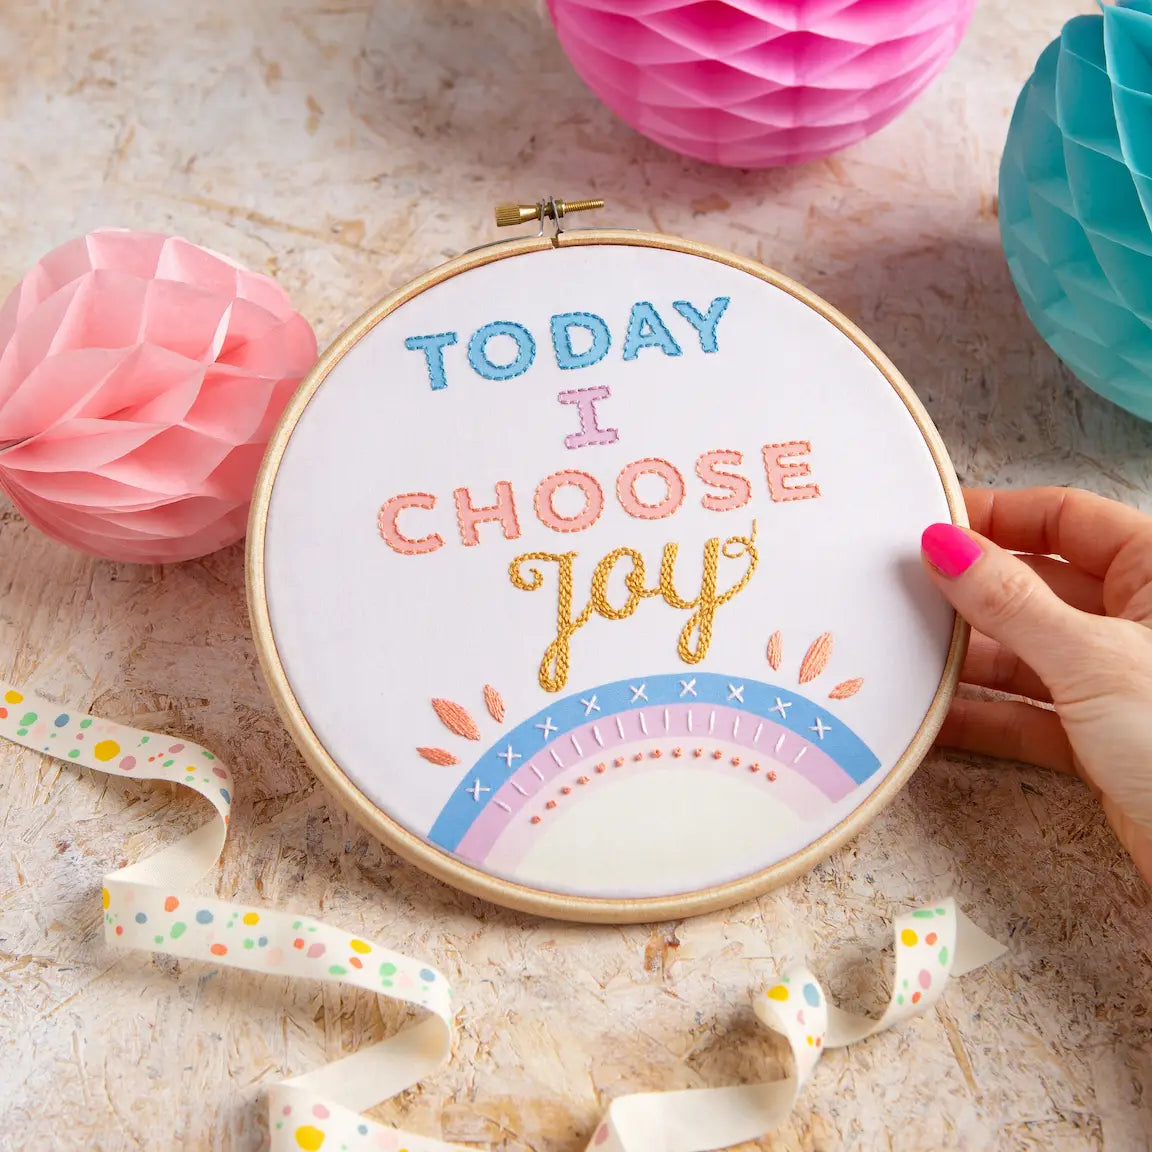 Today I Choose Joy Embroidery Kit - by Hawthorn Handmade